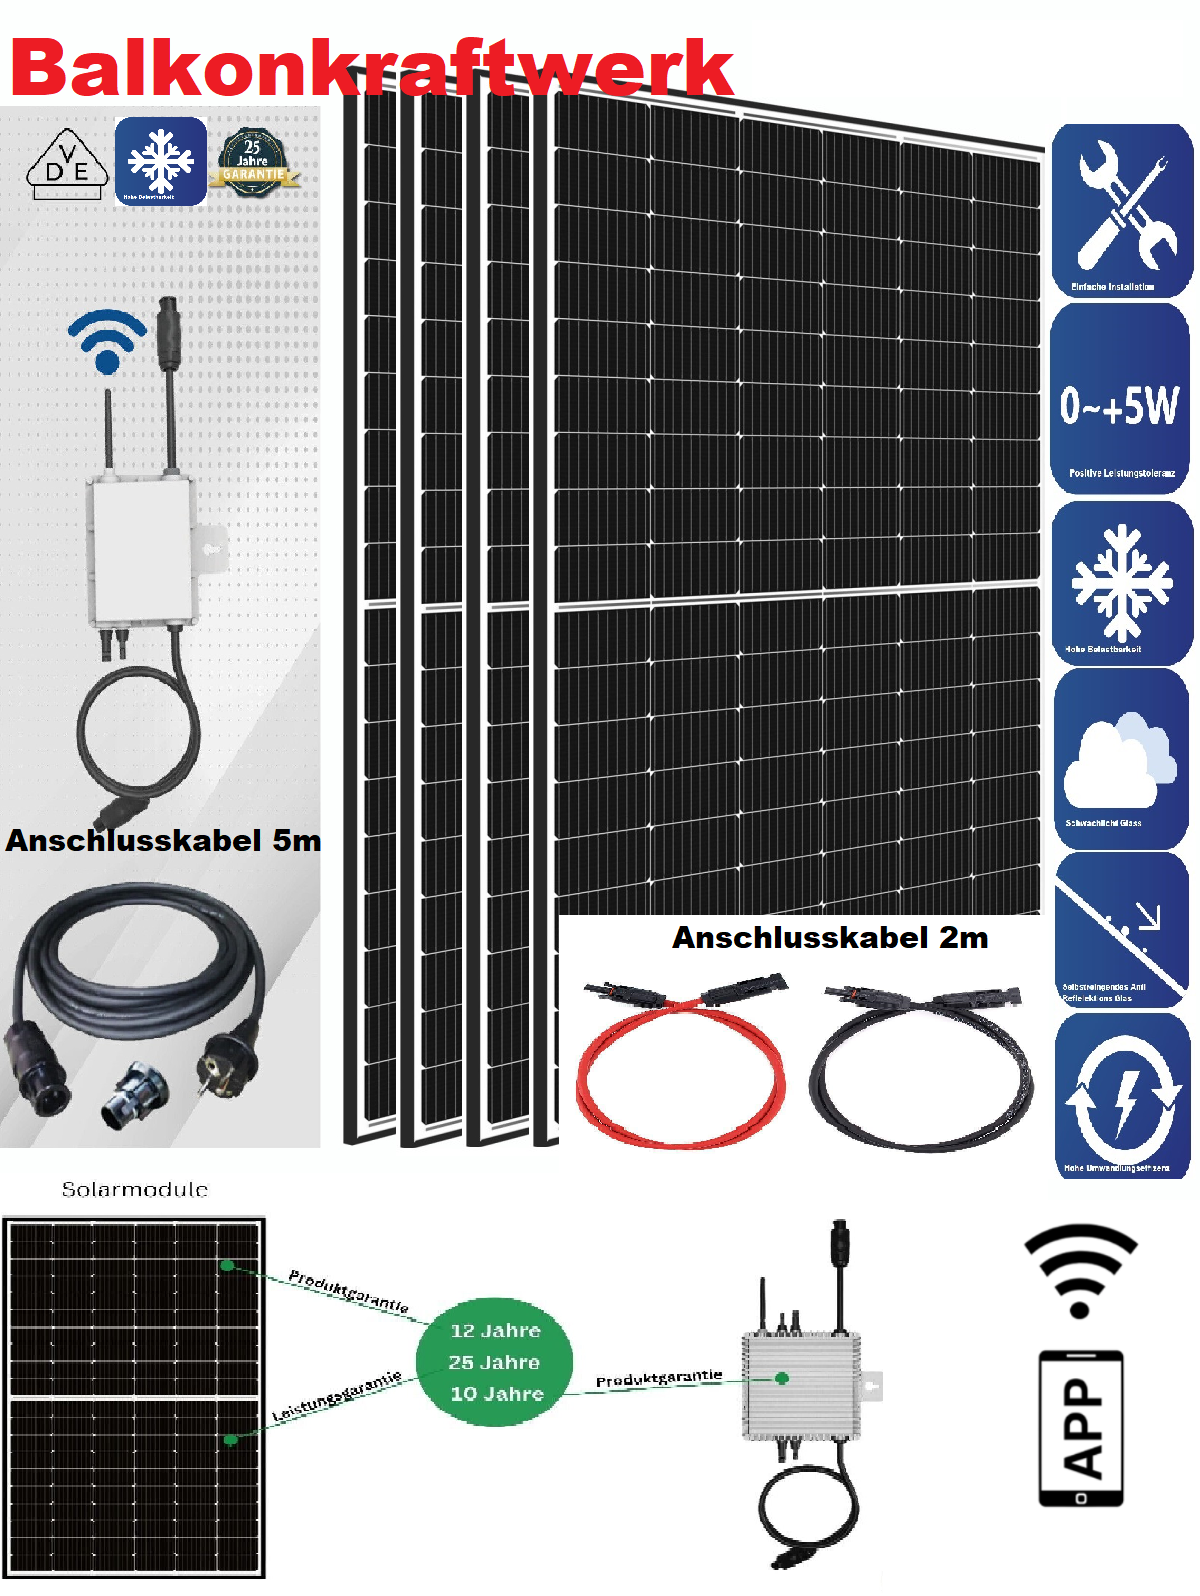 Balkonkraftwerk 1700 W/ 1600 W Photovoltaik Solaranlage Steckerfertig WIFI Smart